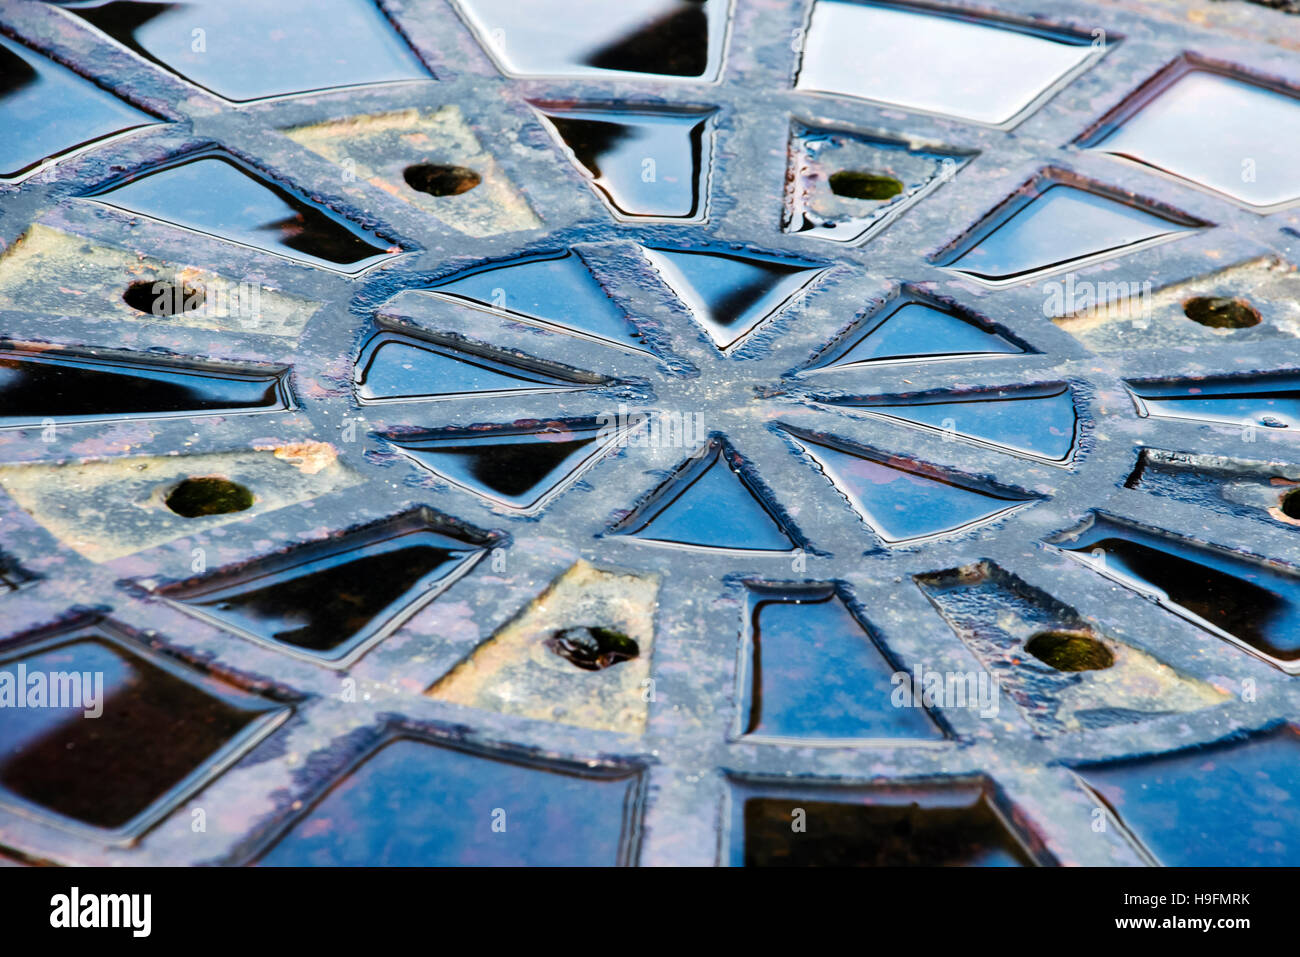 Manhole cover abstract Stock Photo